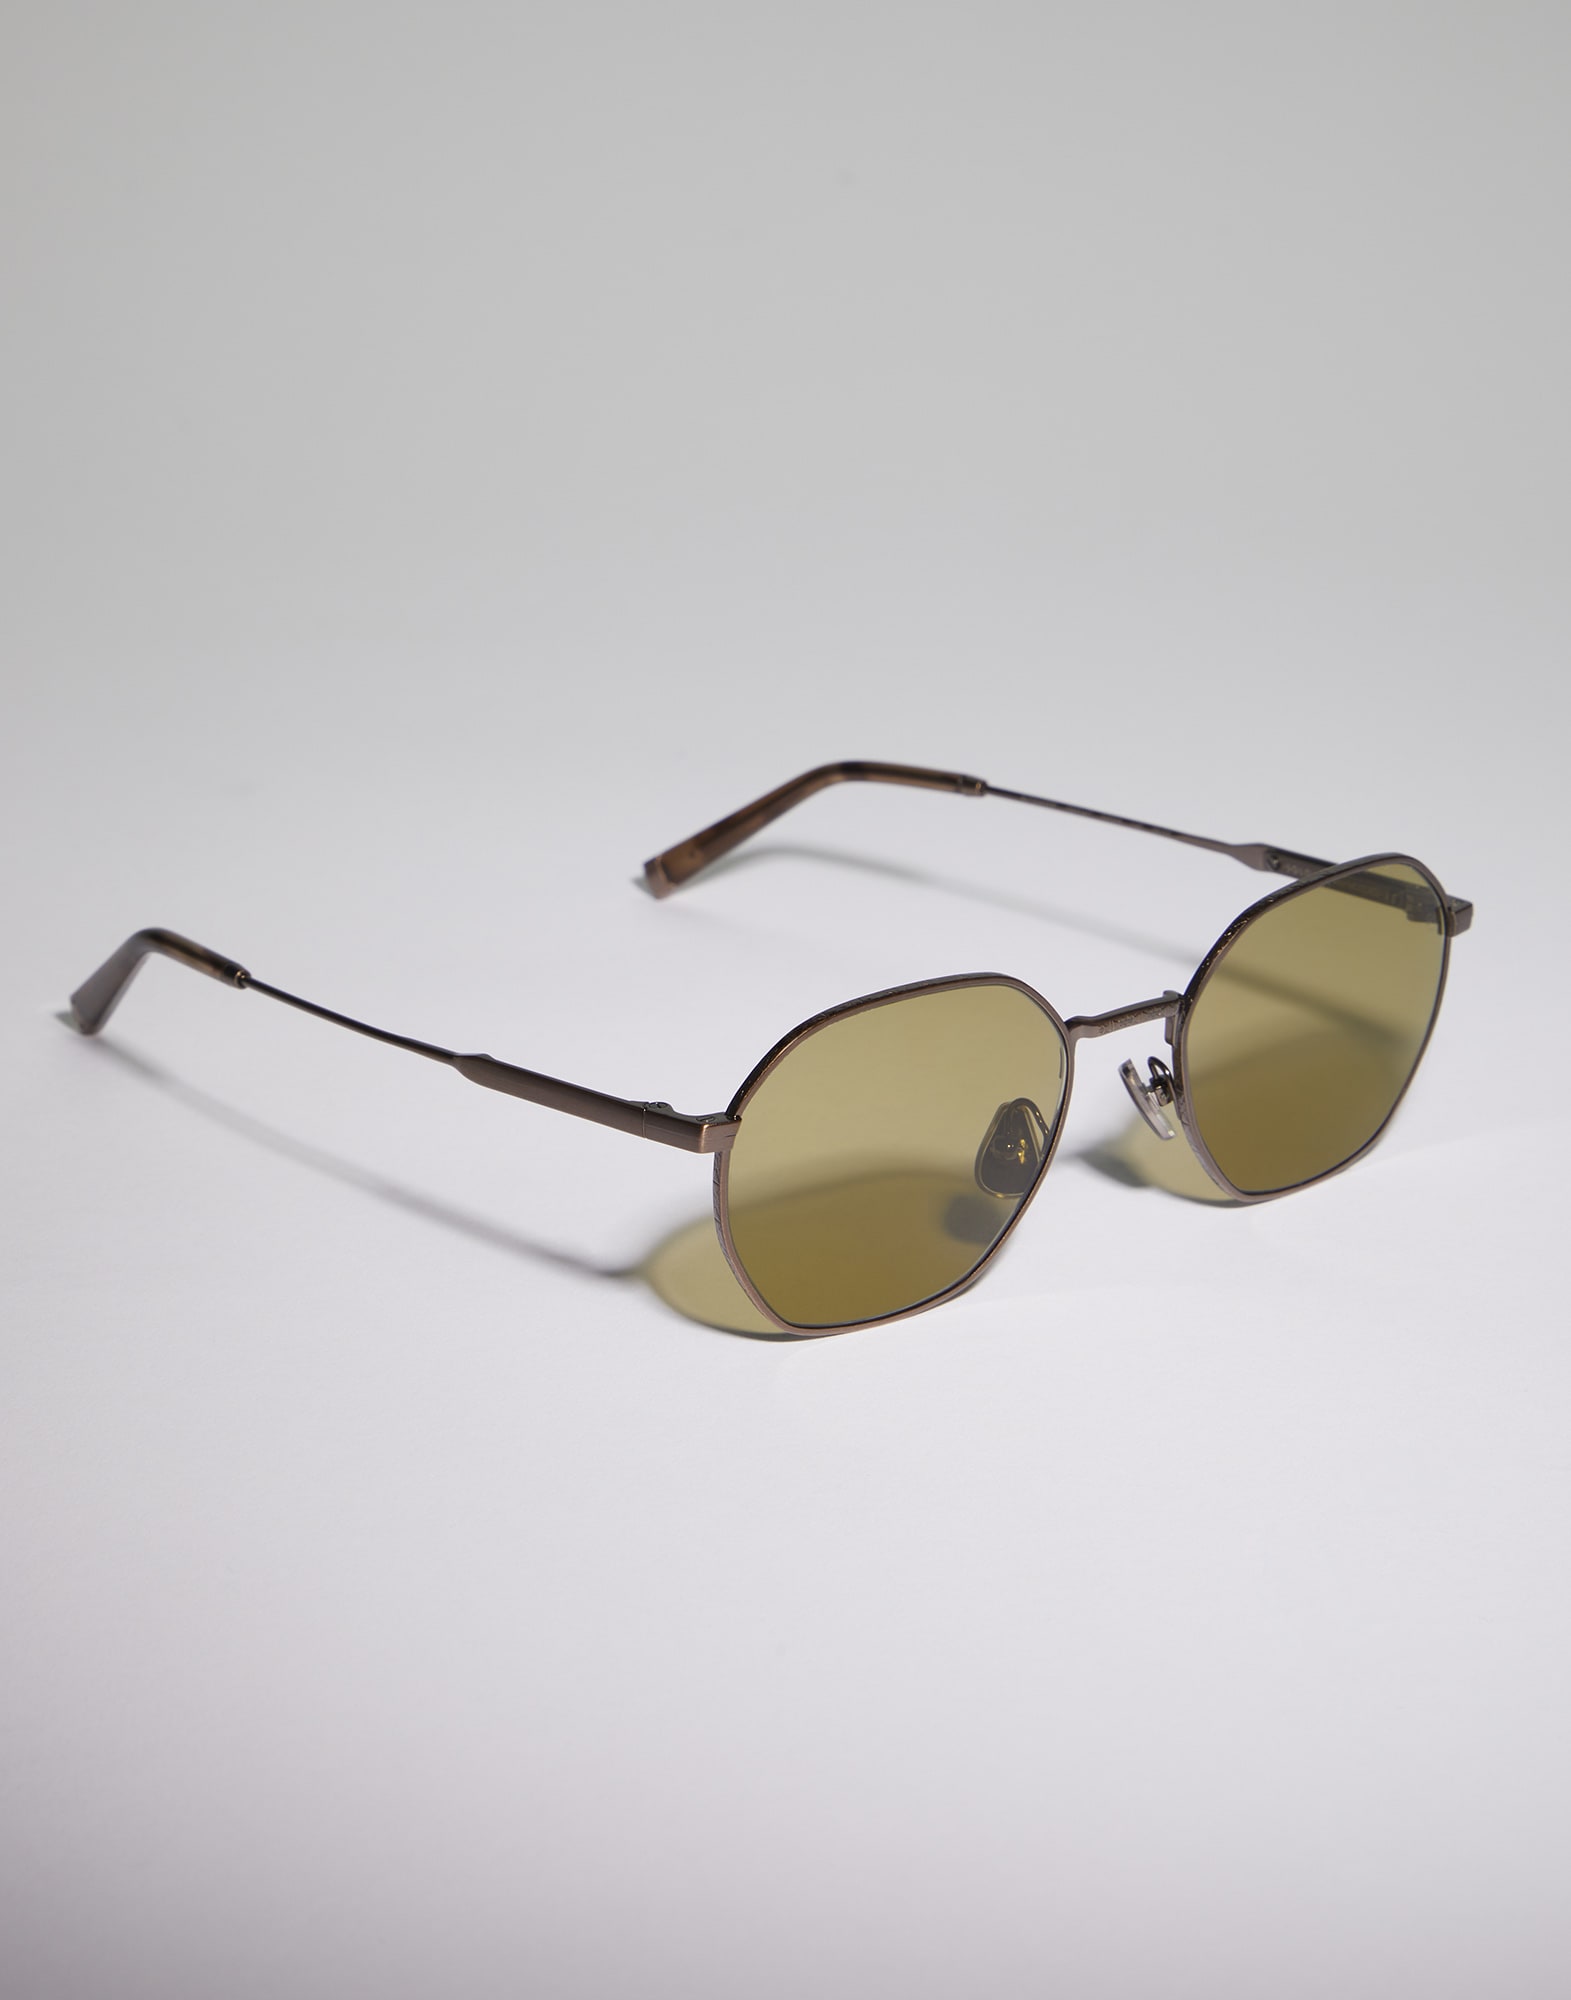 Sunglasses with photochromic lenses